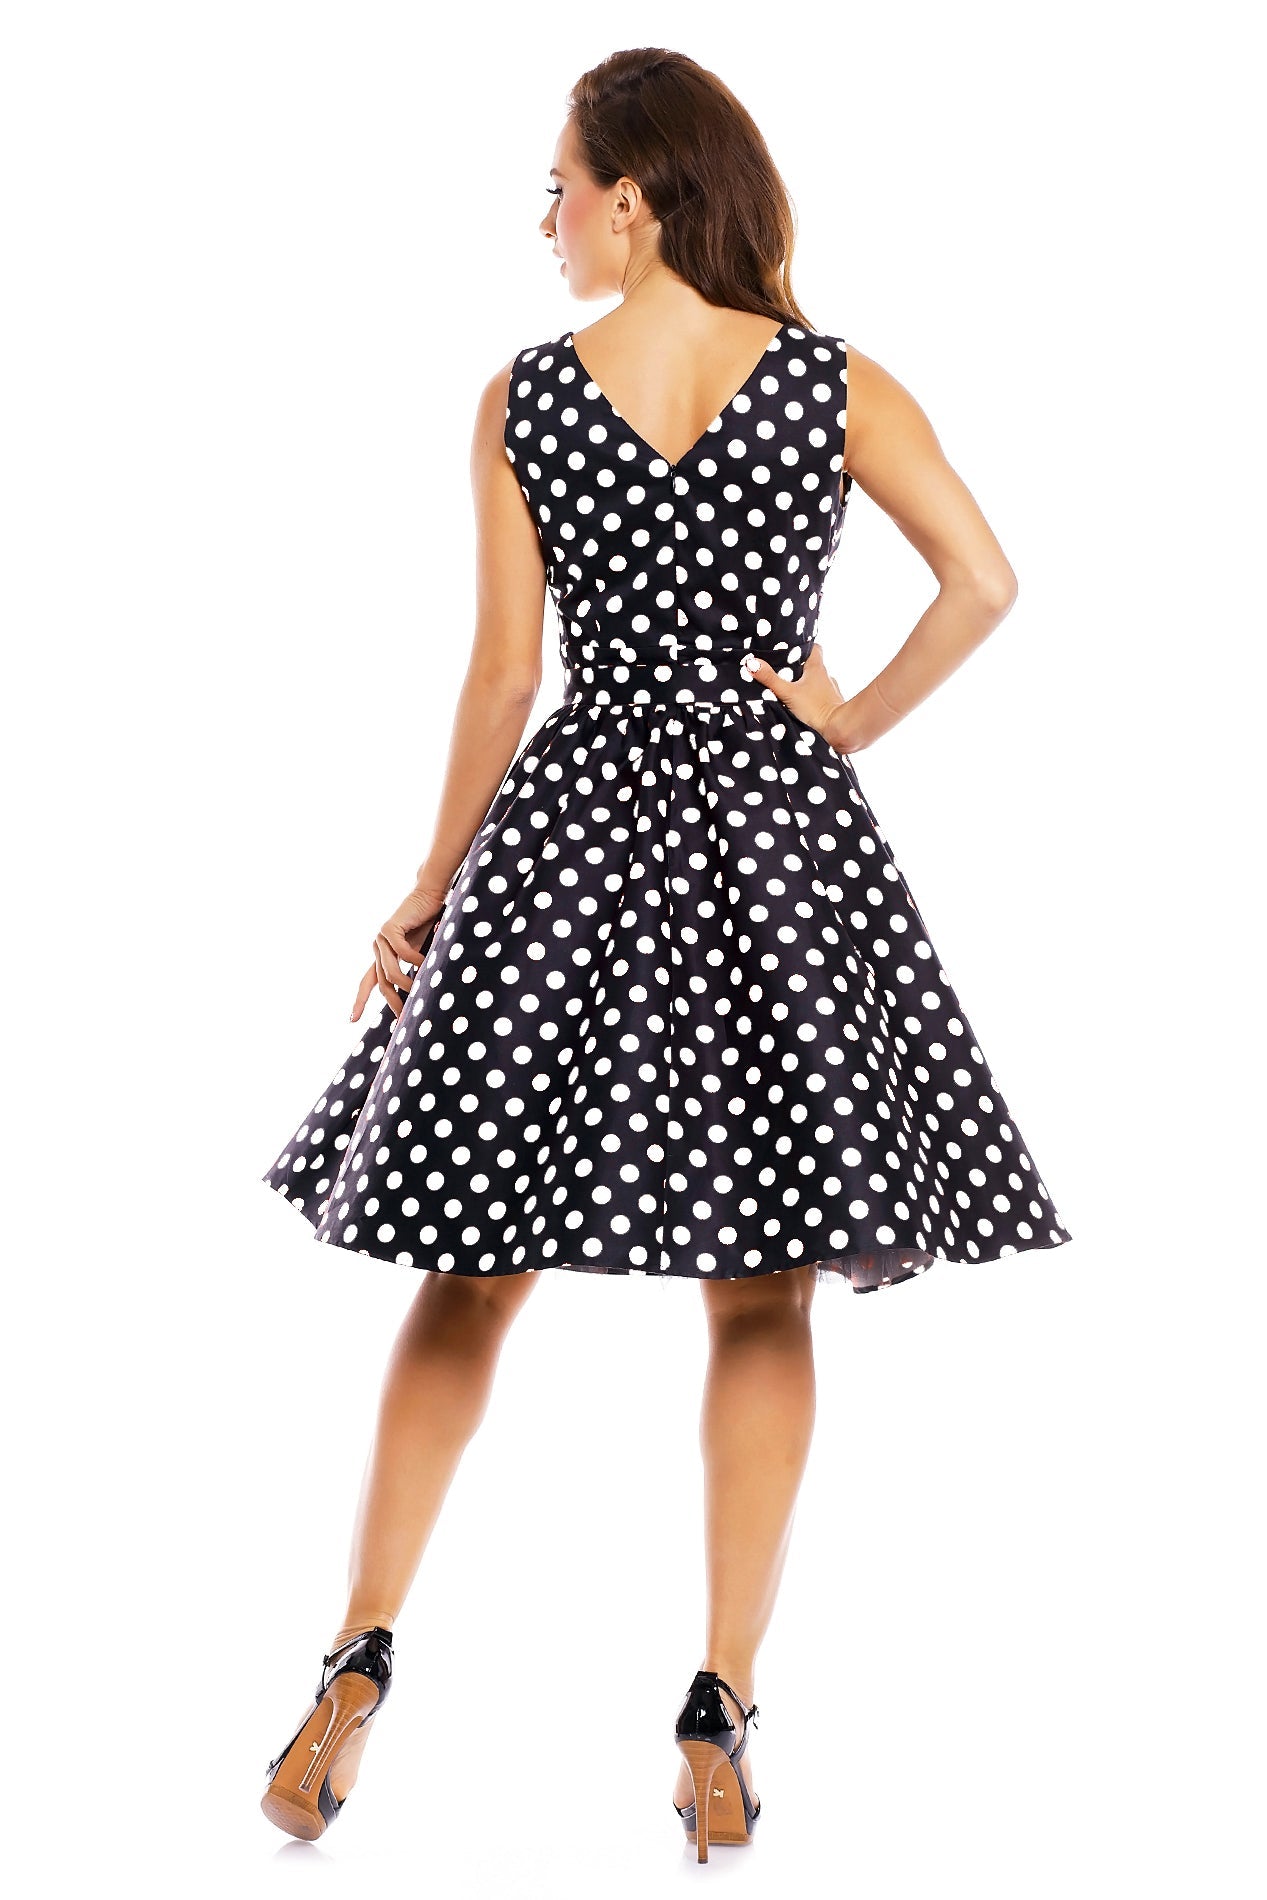 V-neck 50s Style Spot Dress in Black-White